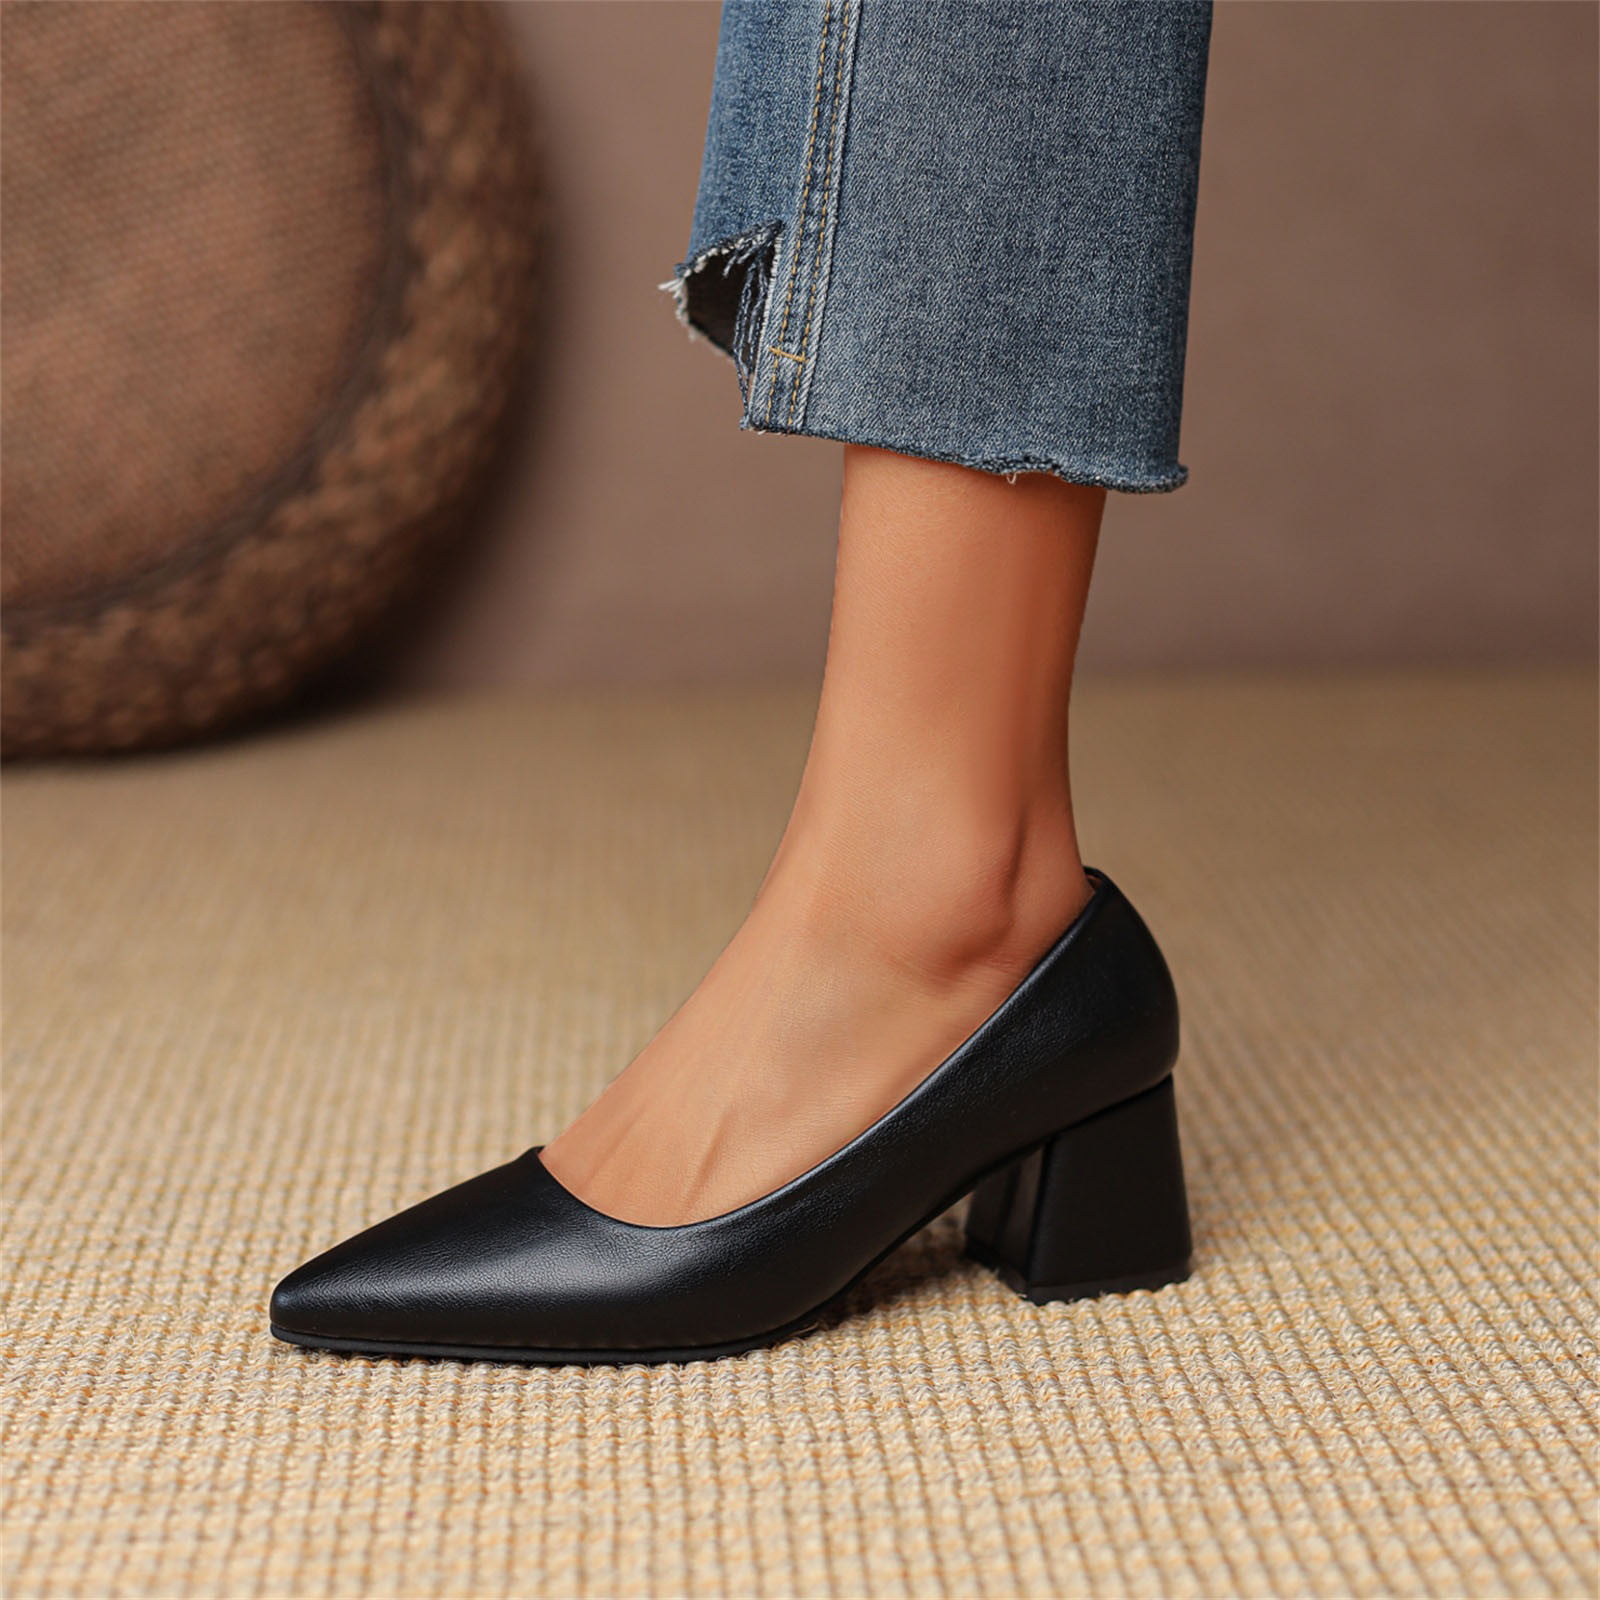 Ladies Lightweight Slip On Dress Shoes Casual Fashion Block Heel High Heels  | eBay